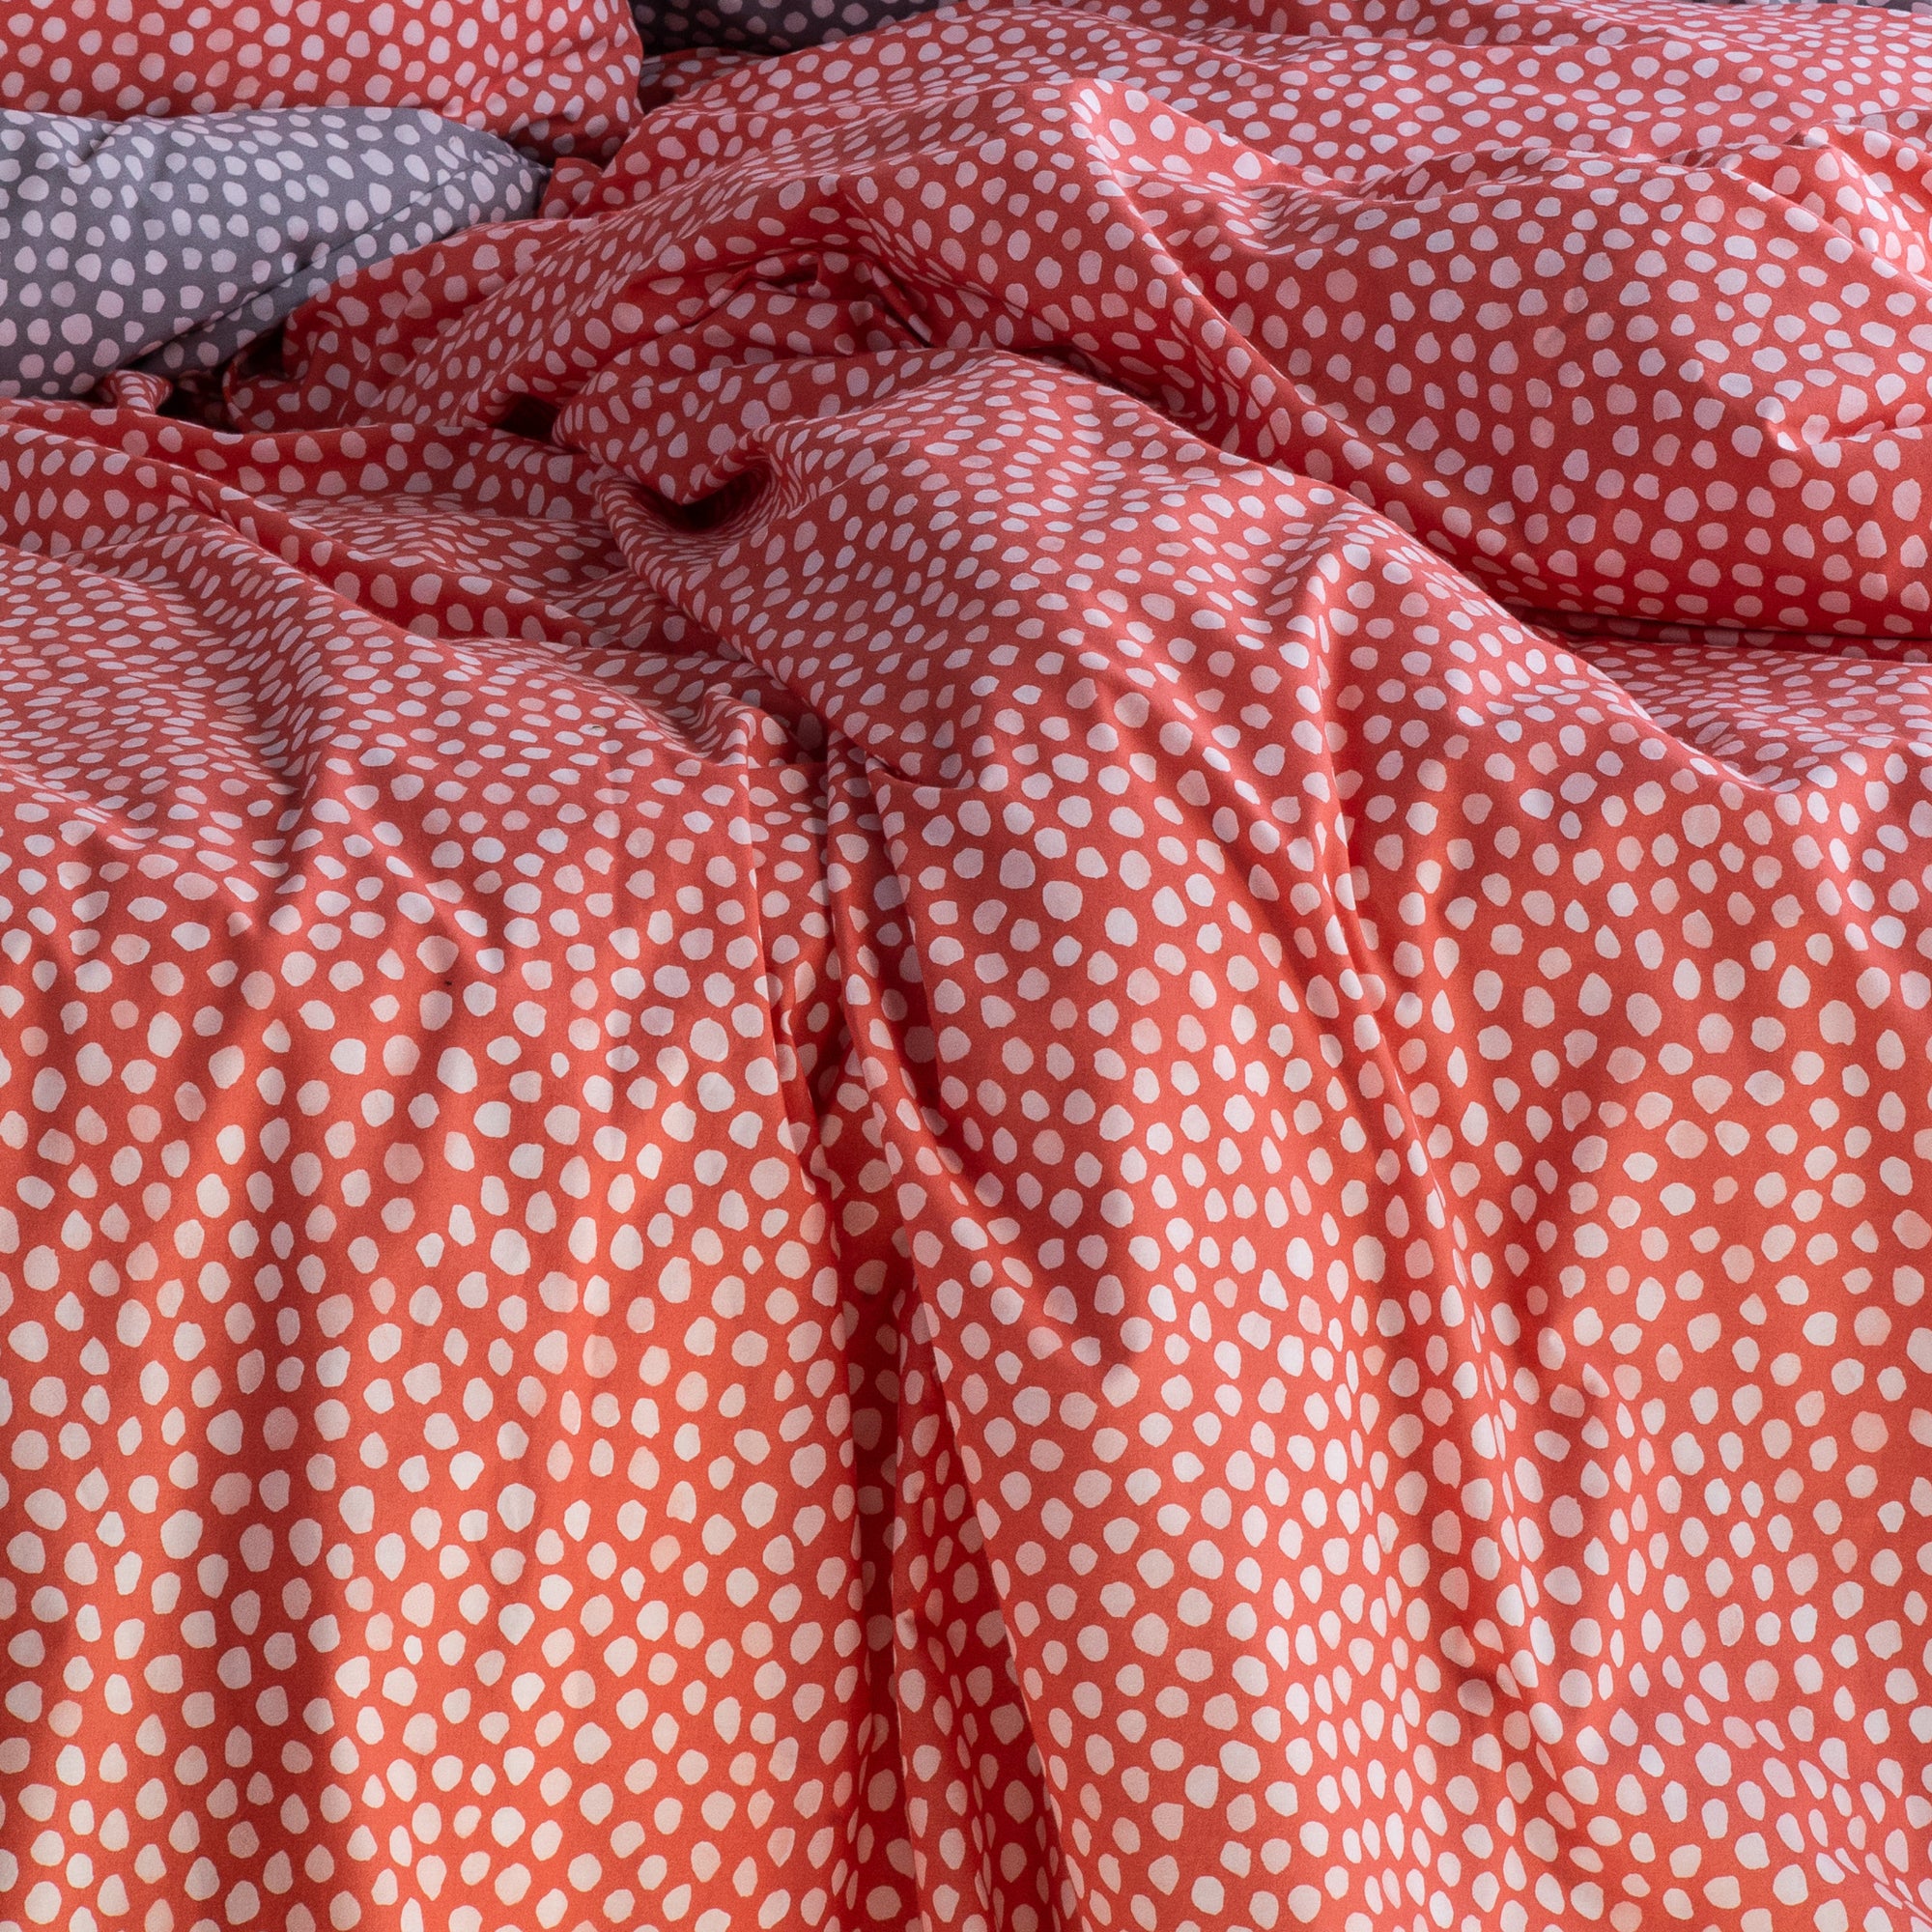 Pink Coral Red Orange Premium Duvet Cover Bedding Set